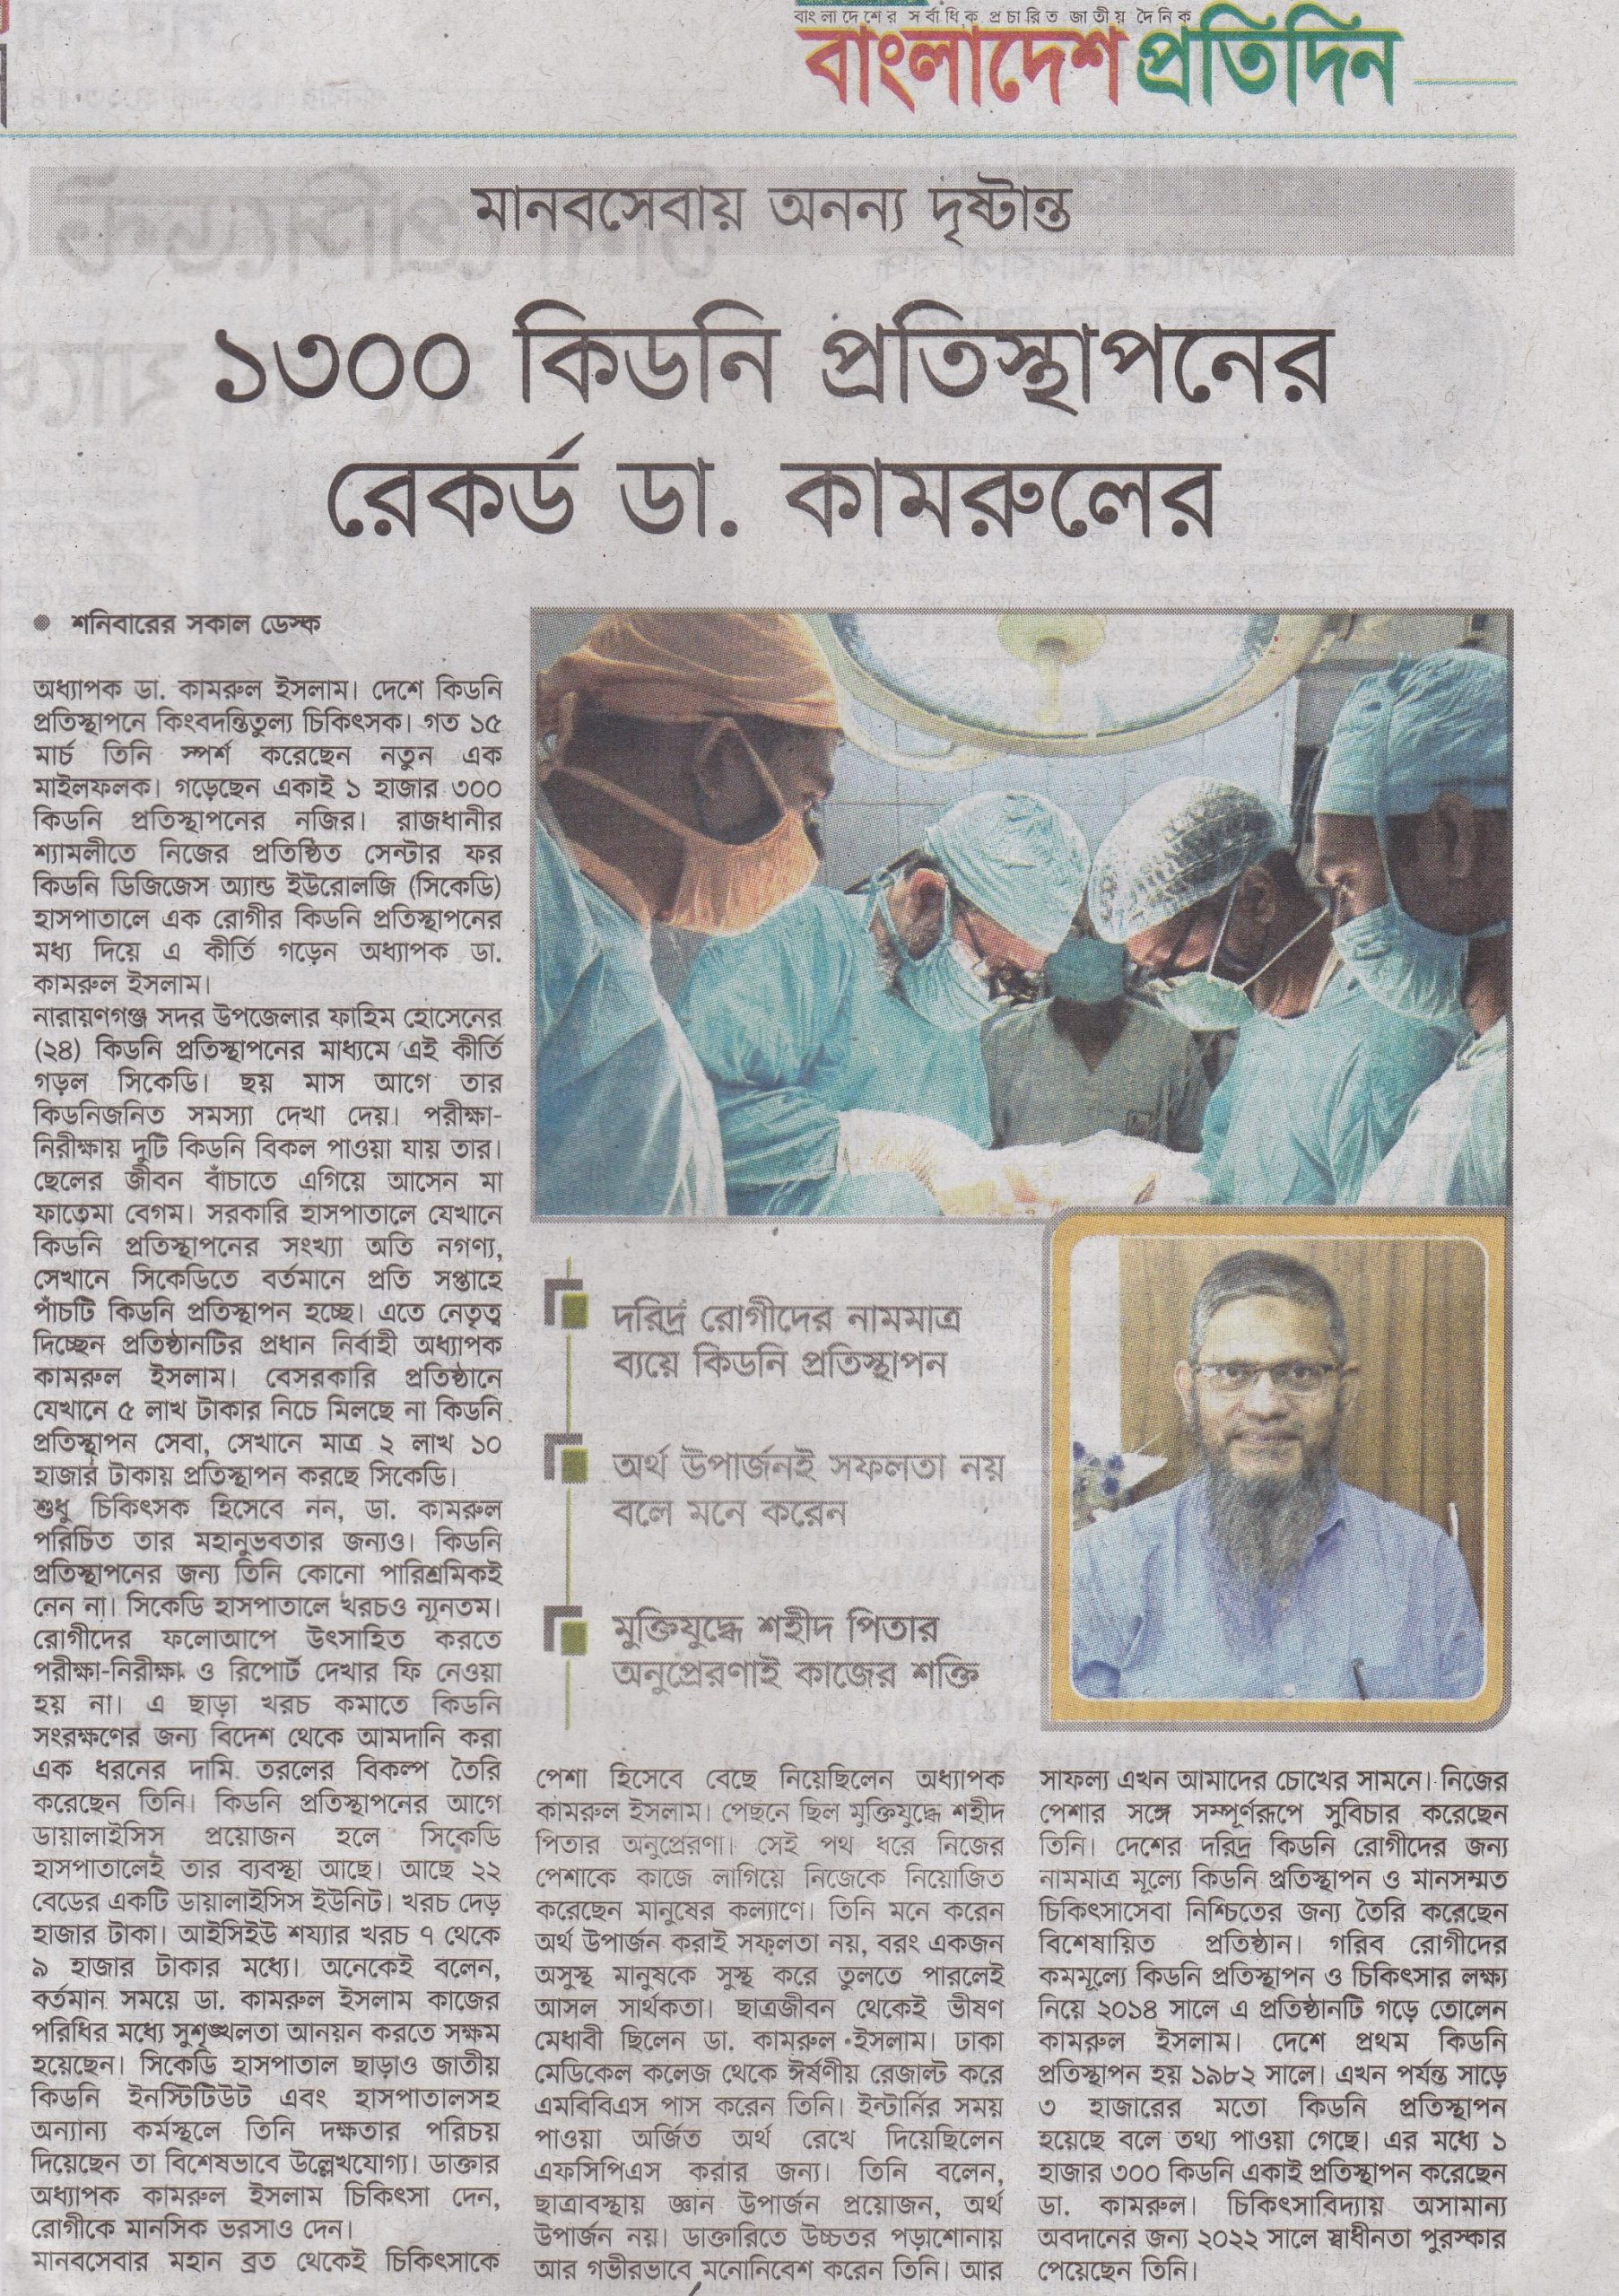 dr kamrul islam done 1300+ kidney transplant at ckdu hospital